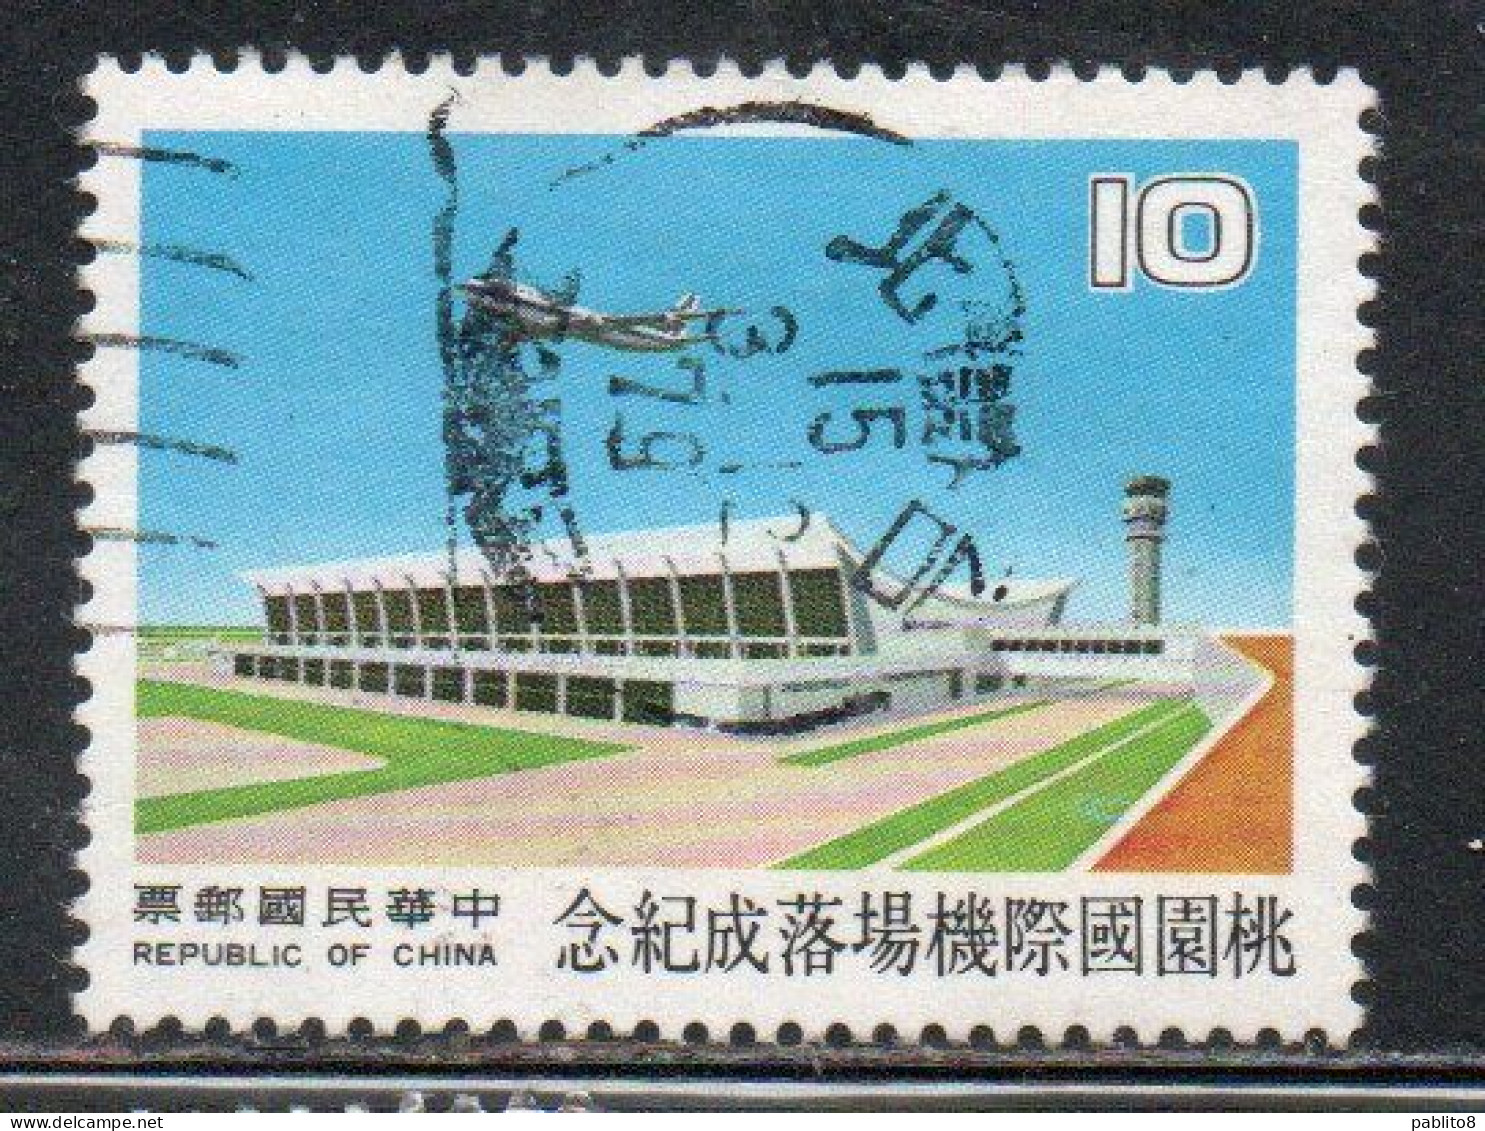 CHINA REPUBLIC CINA TAIWAN FORMOSA 1978 TAOYUAN AIRPORT PASSENGER TERMINAL CONTROL TOWER 10$ USED USATO OBLITERE - Usati